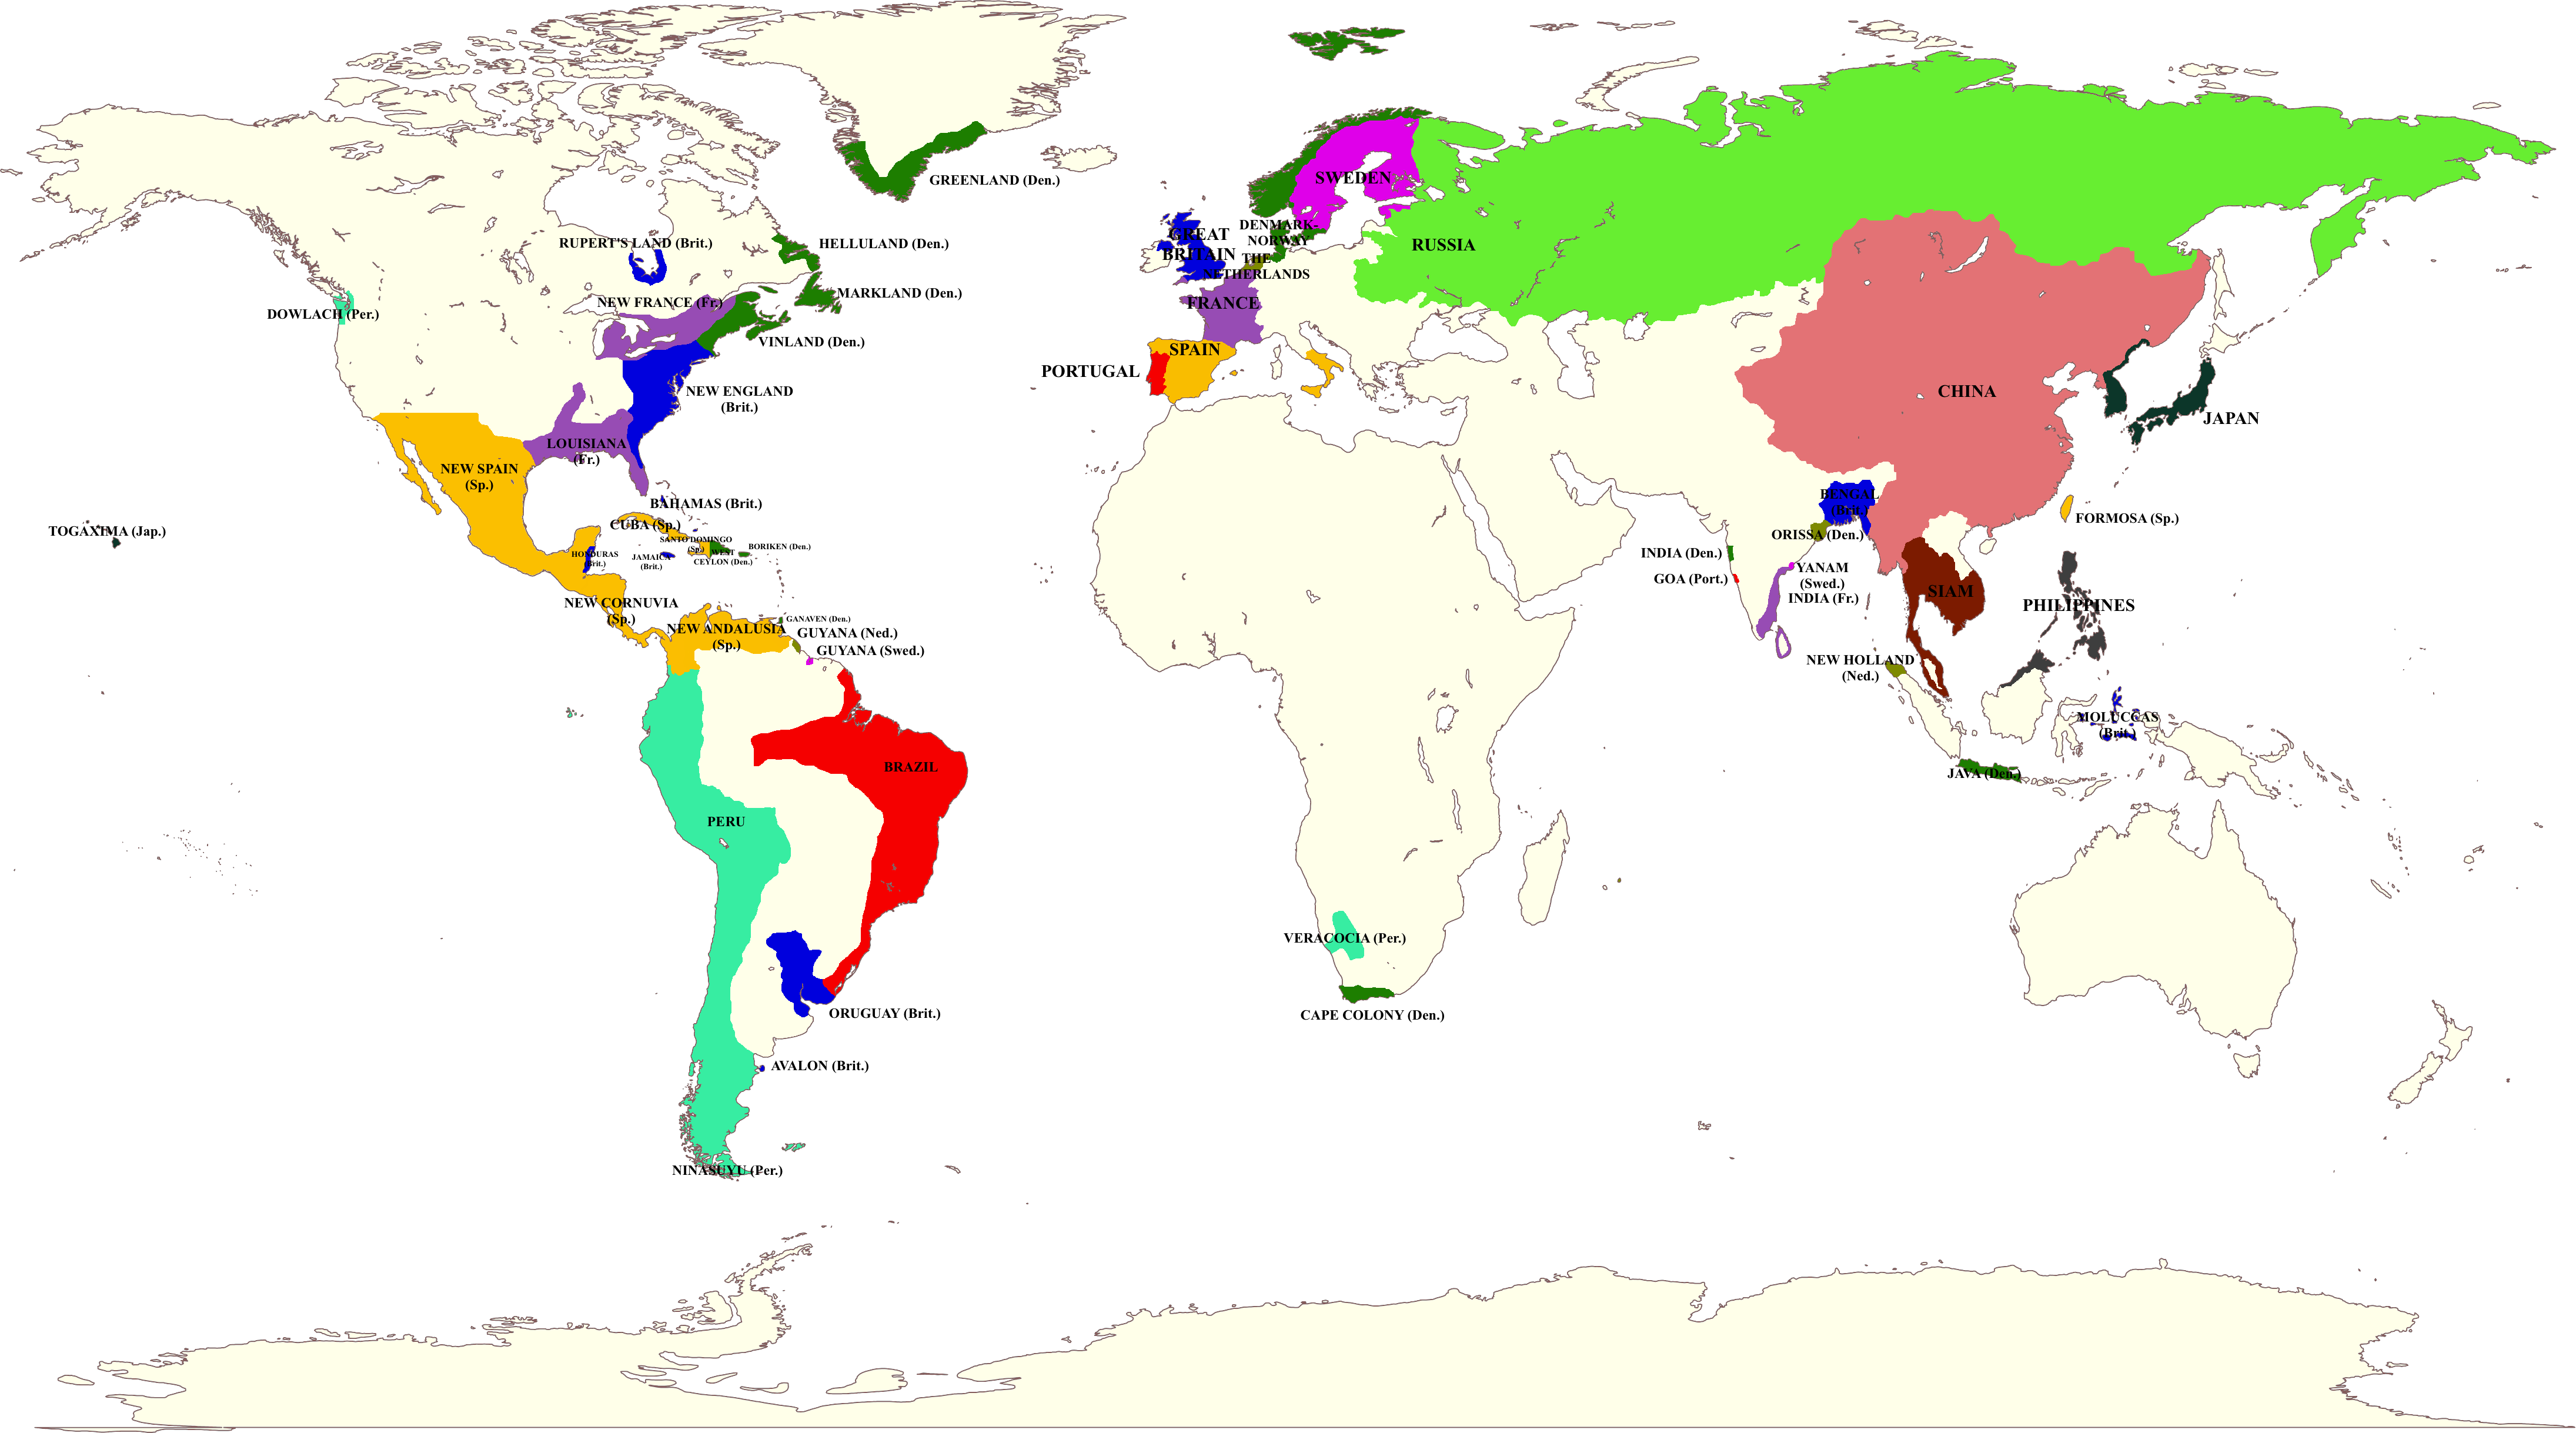 anno 1800 trade routes